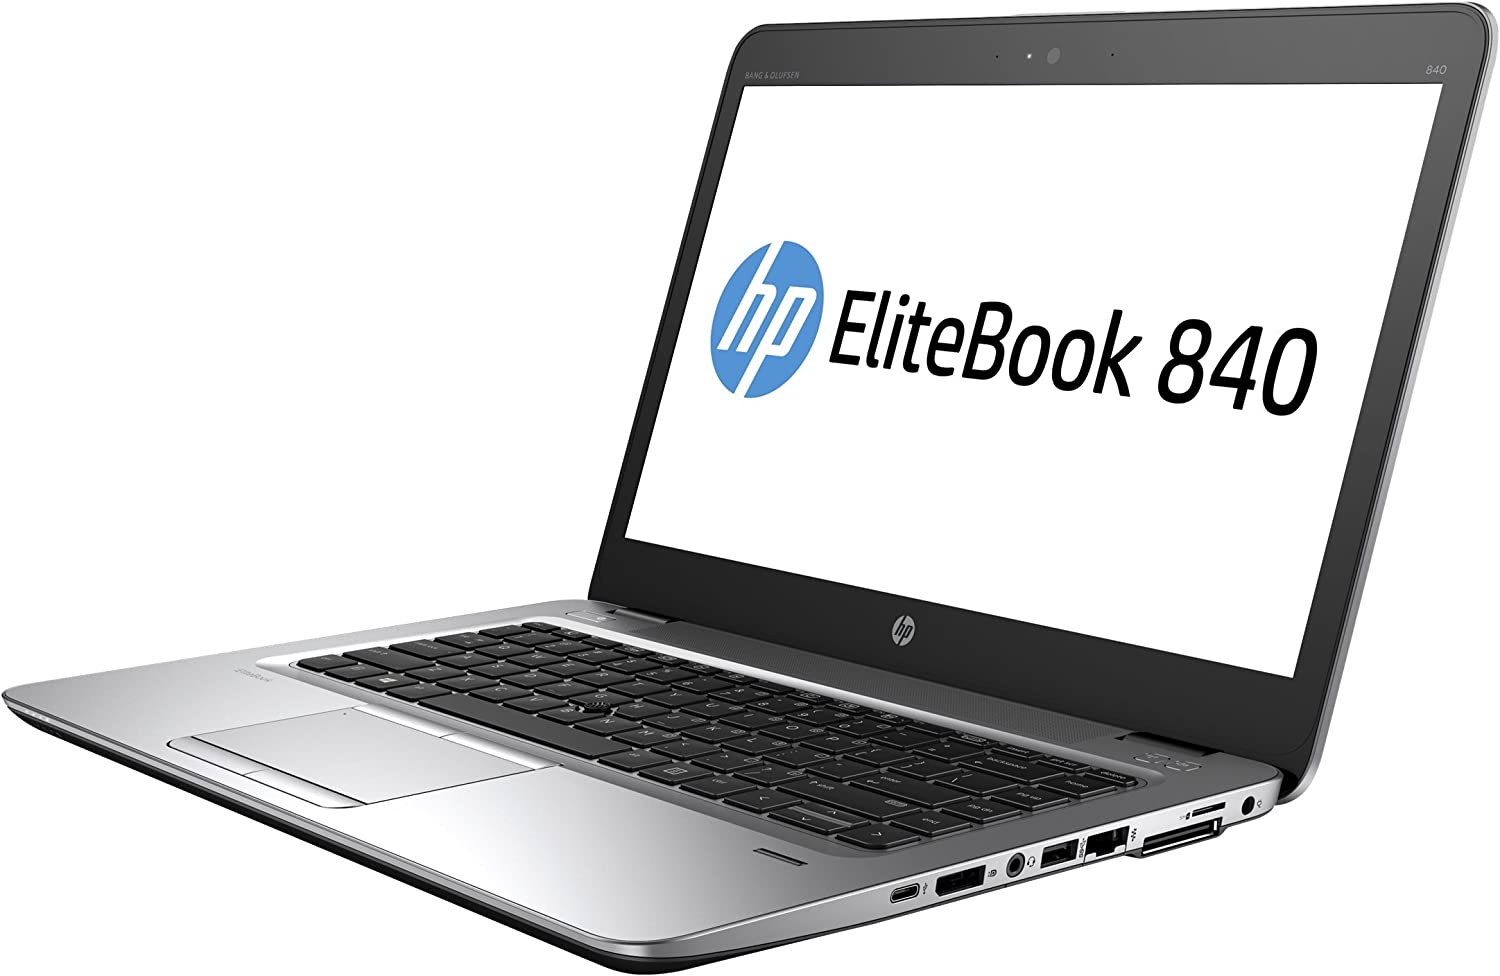 HP EliteBook 840 G5 Business Laptop, Intel Core i5-8350U CPU,14.1 inch Display, Windows 10 (Renewed)